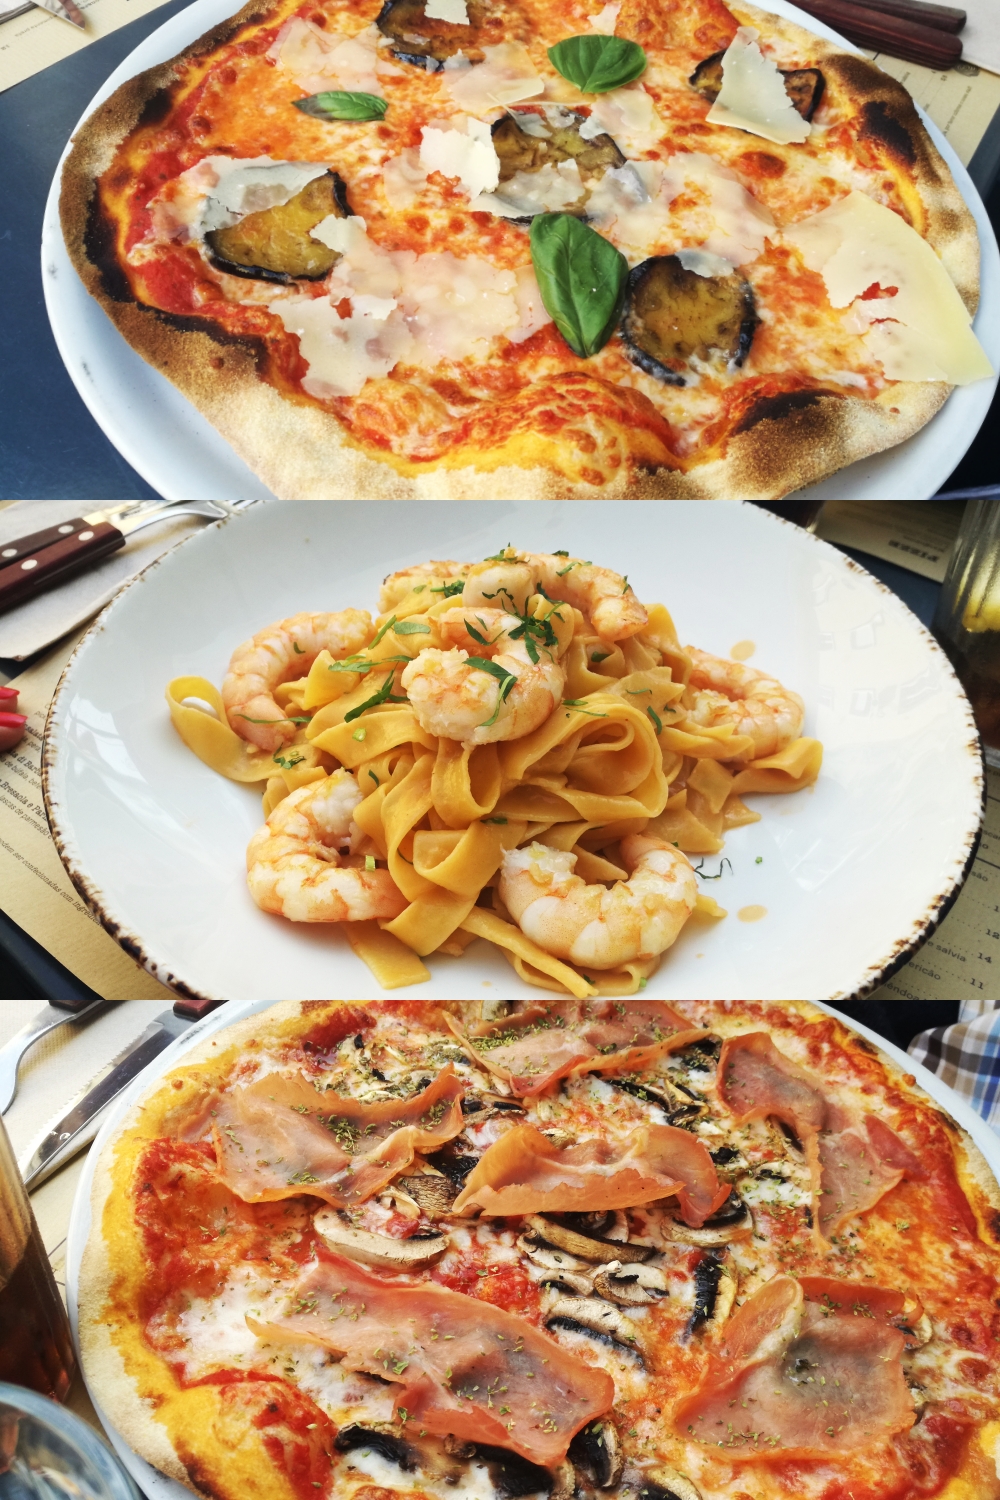 pizzas pastas pasta non basta italiano lisboa review zomato